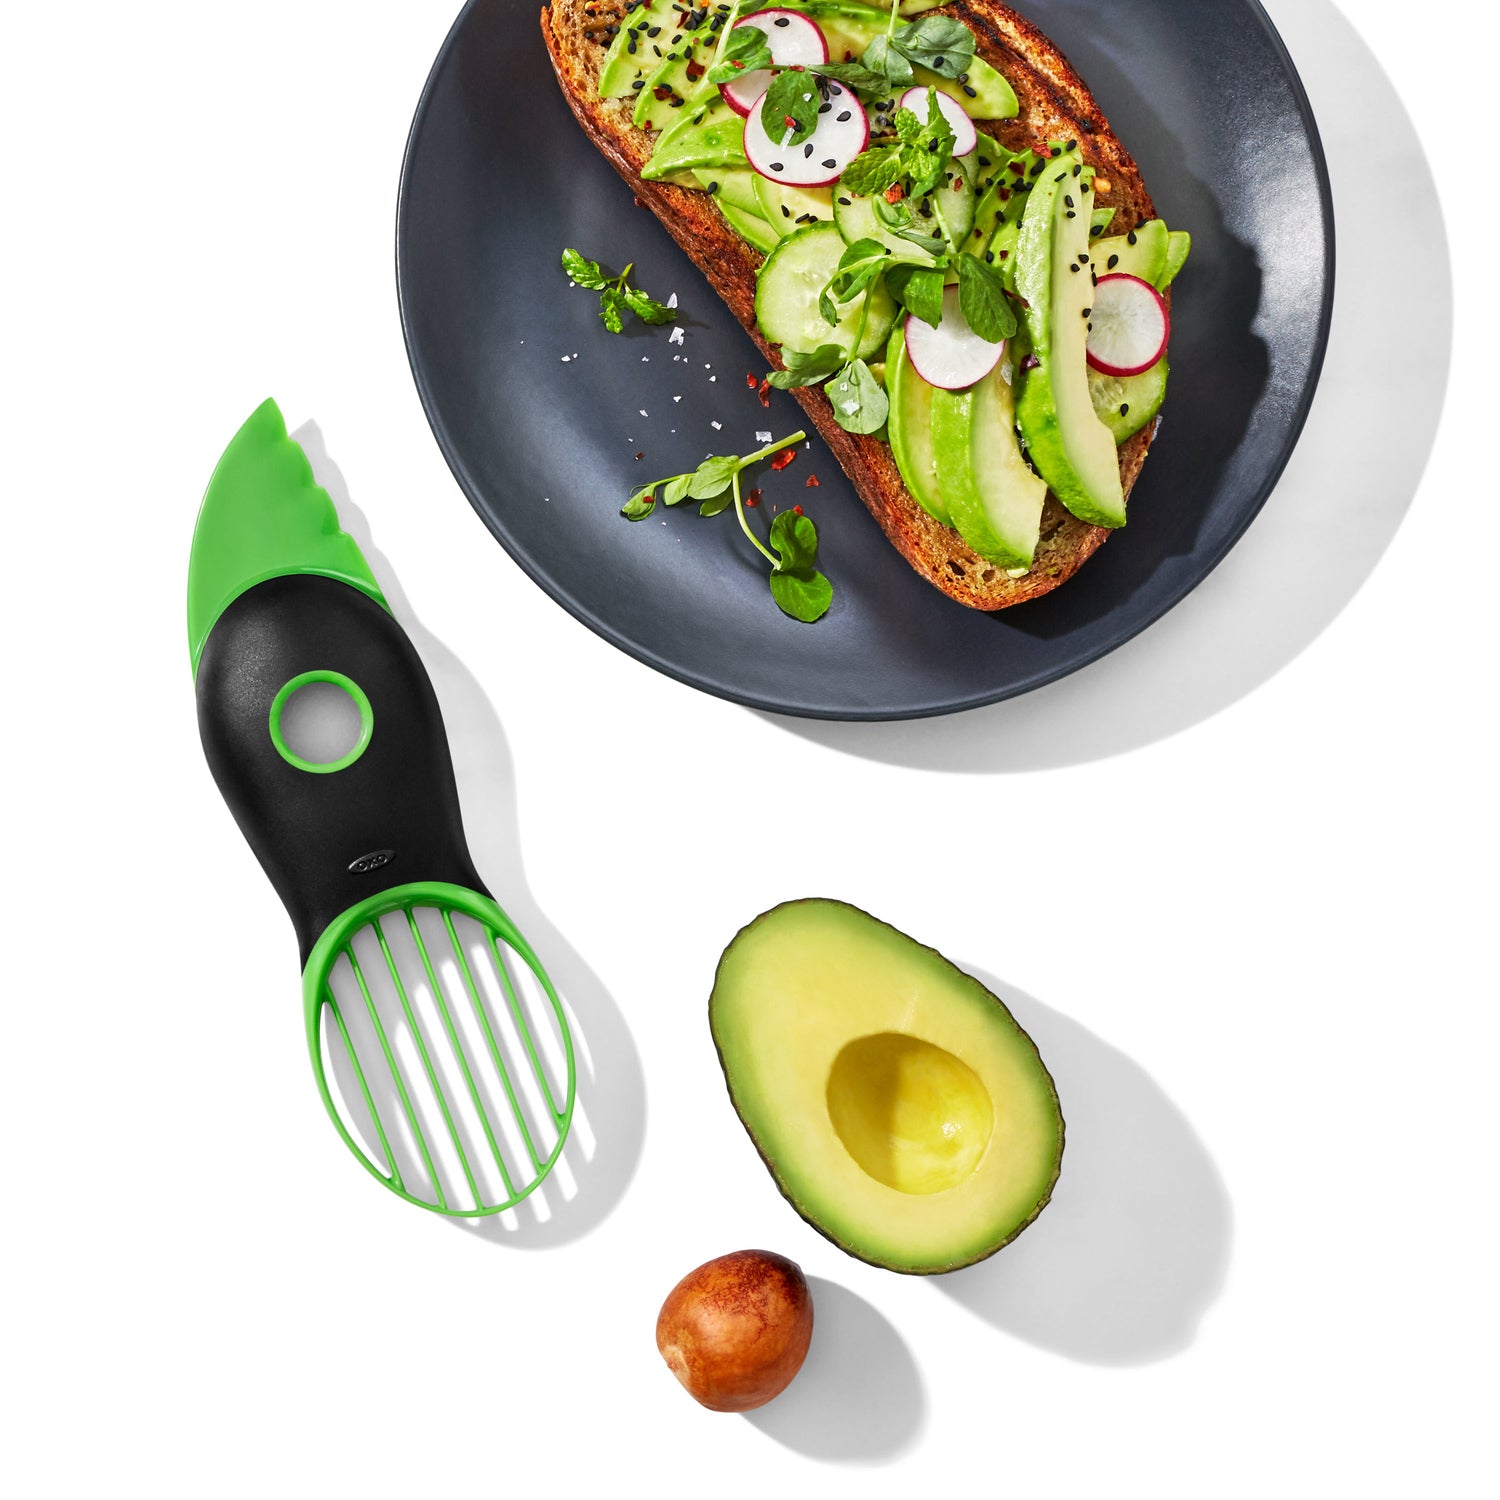 OXO Avocado Slice 3-in-1 Tool 1252180 – Good's Store Online